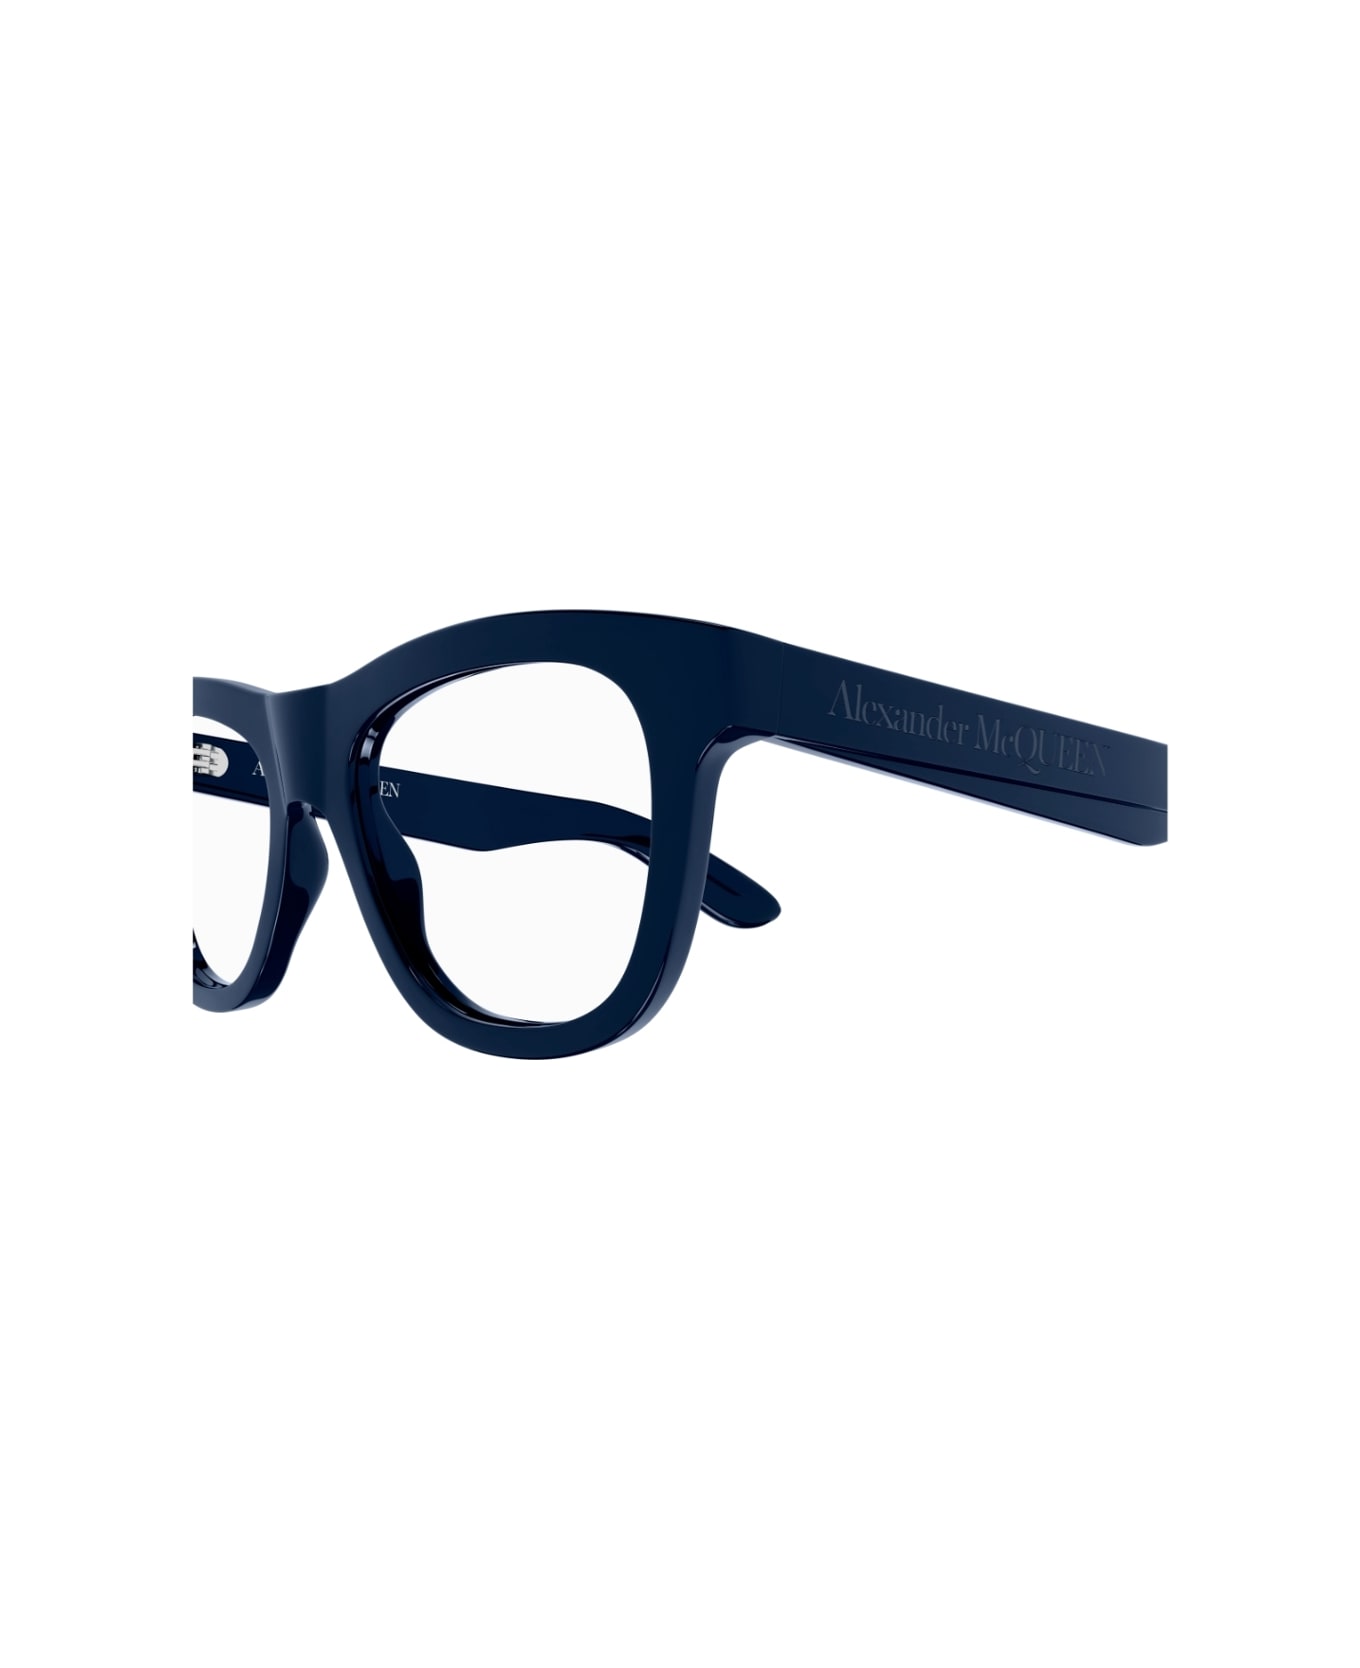 Alexander McQueen Eyewear AM0421o 004 Glasses